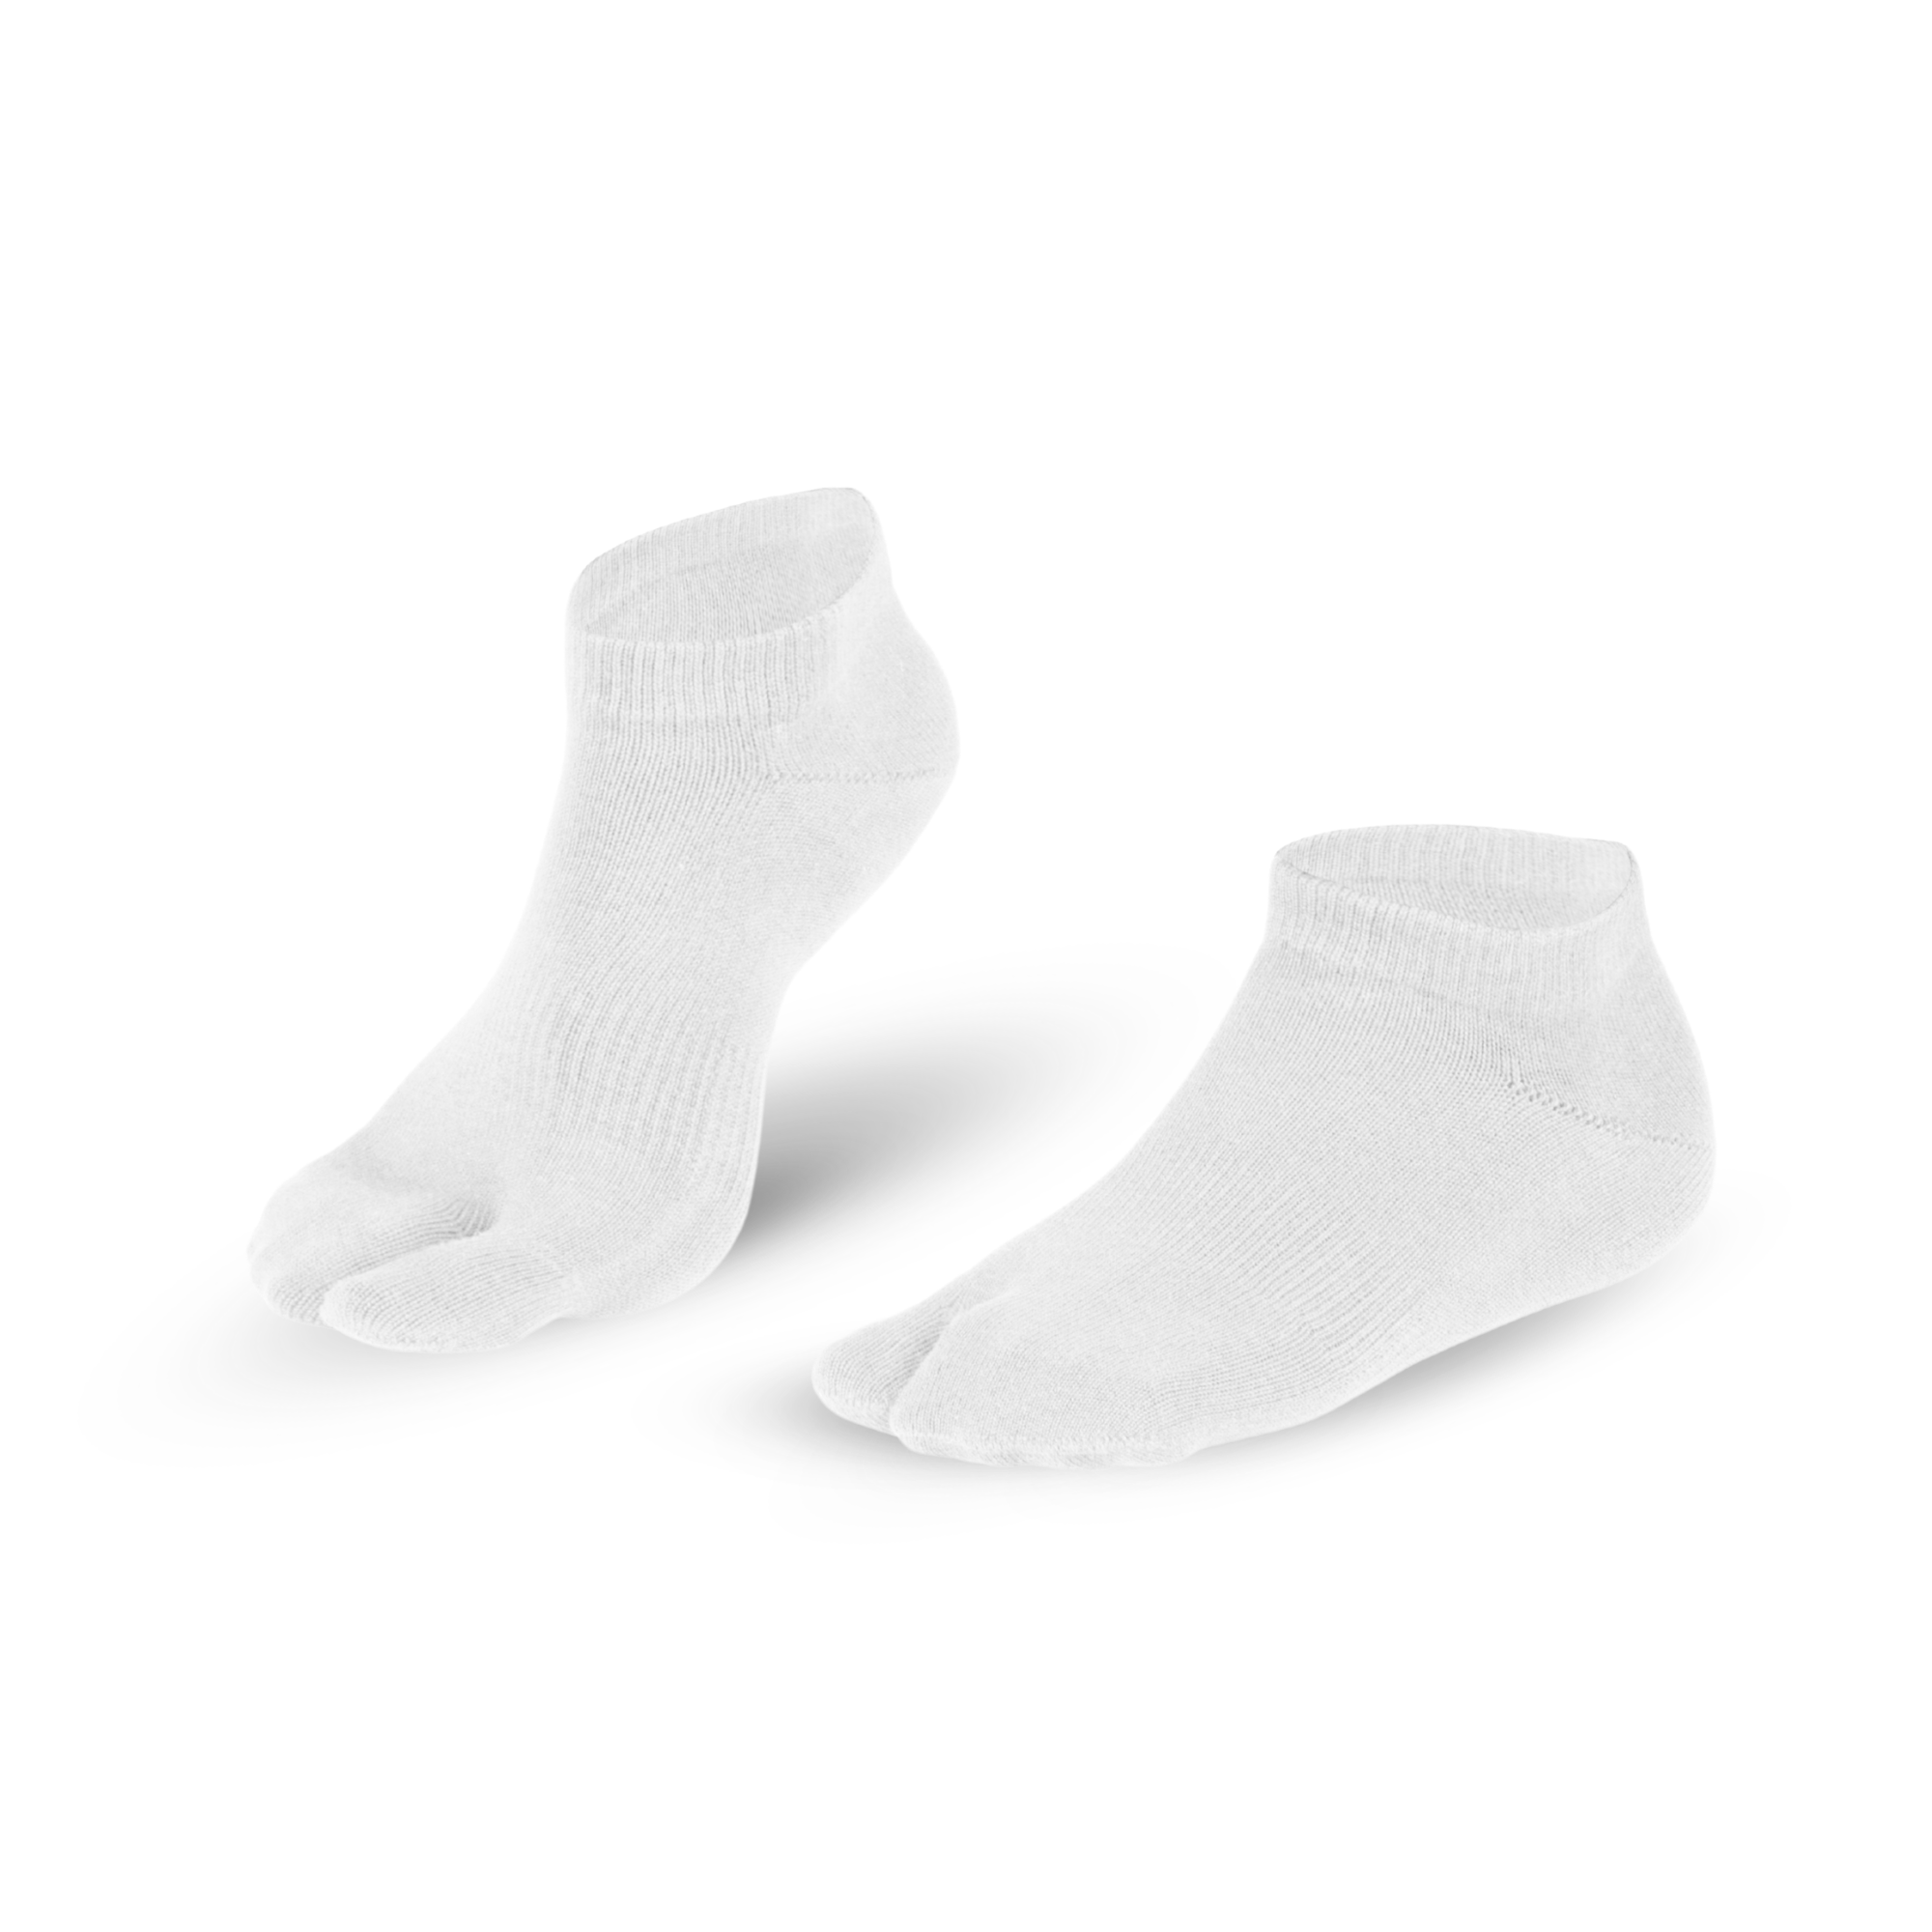 Knitido Tabi Socks Sneaker, kurze Baumwoll-Tabisocken mit einzelner großer Zehe weiß